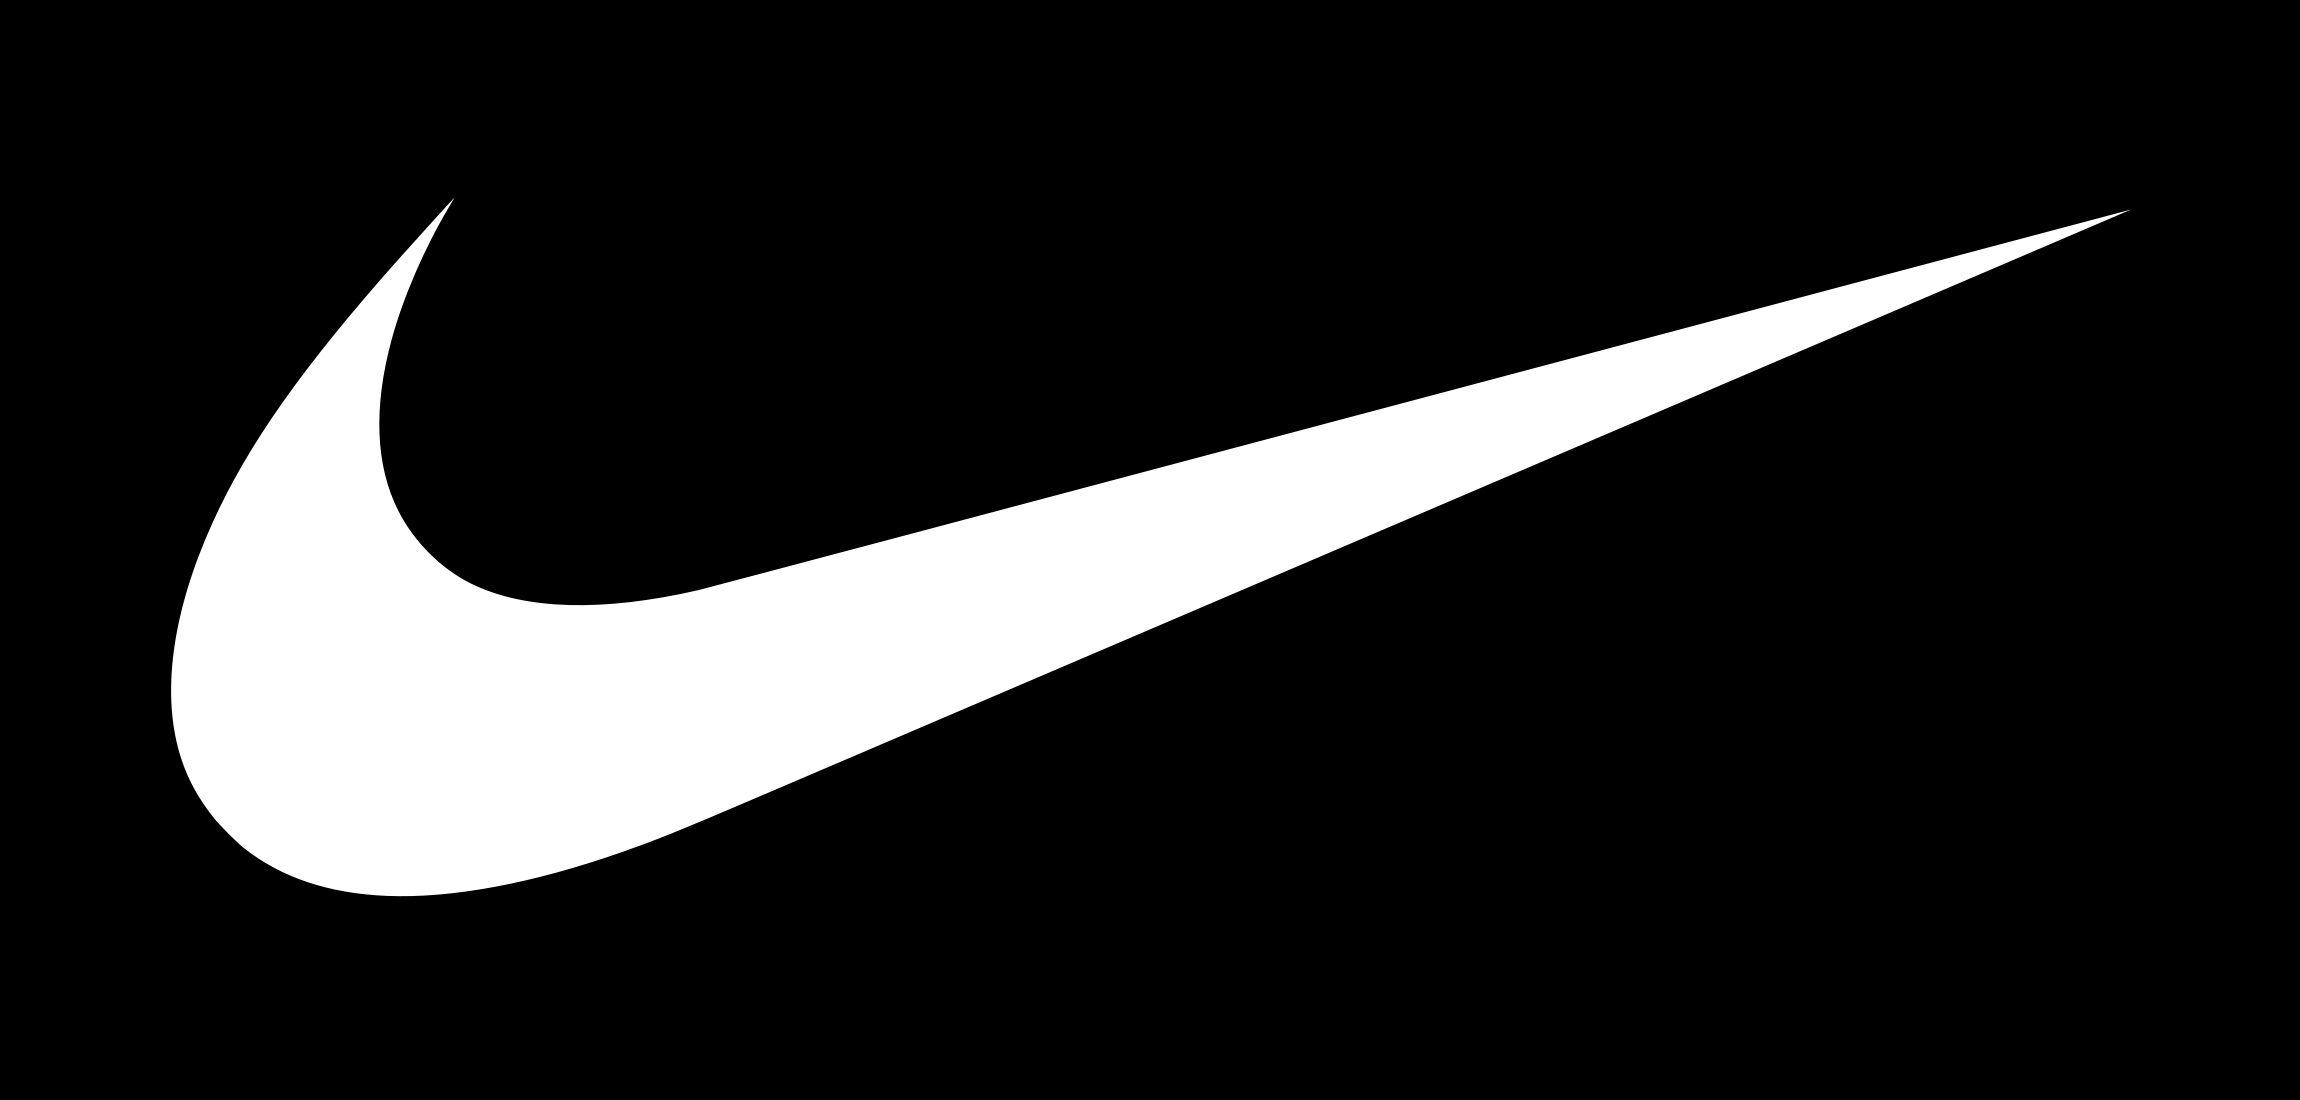 Niike Logo - Nike Logo, Nike Symbol Meaning, History and Evolution